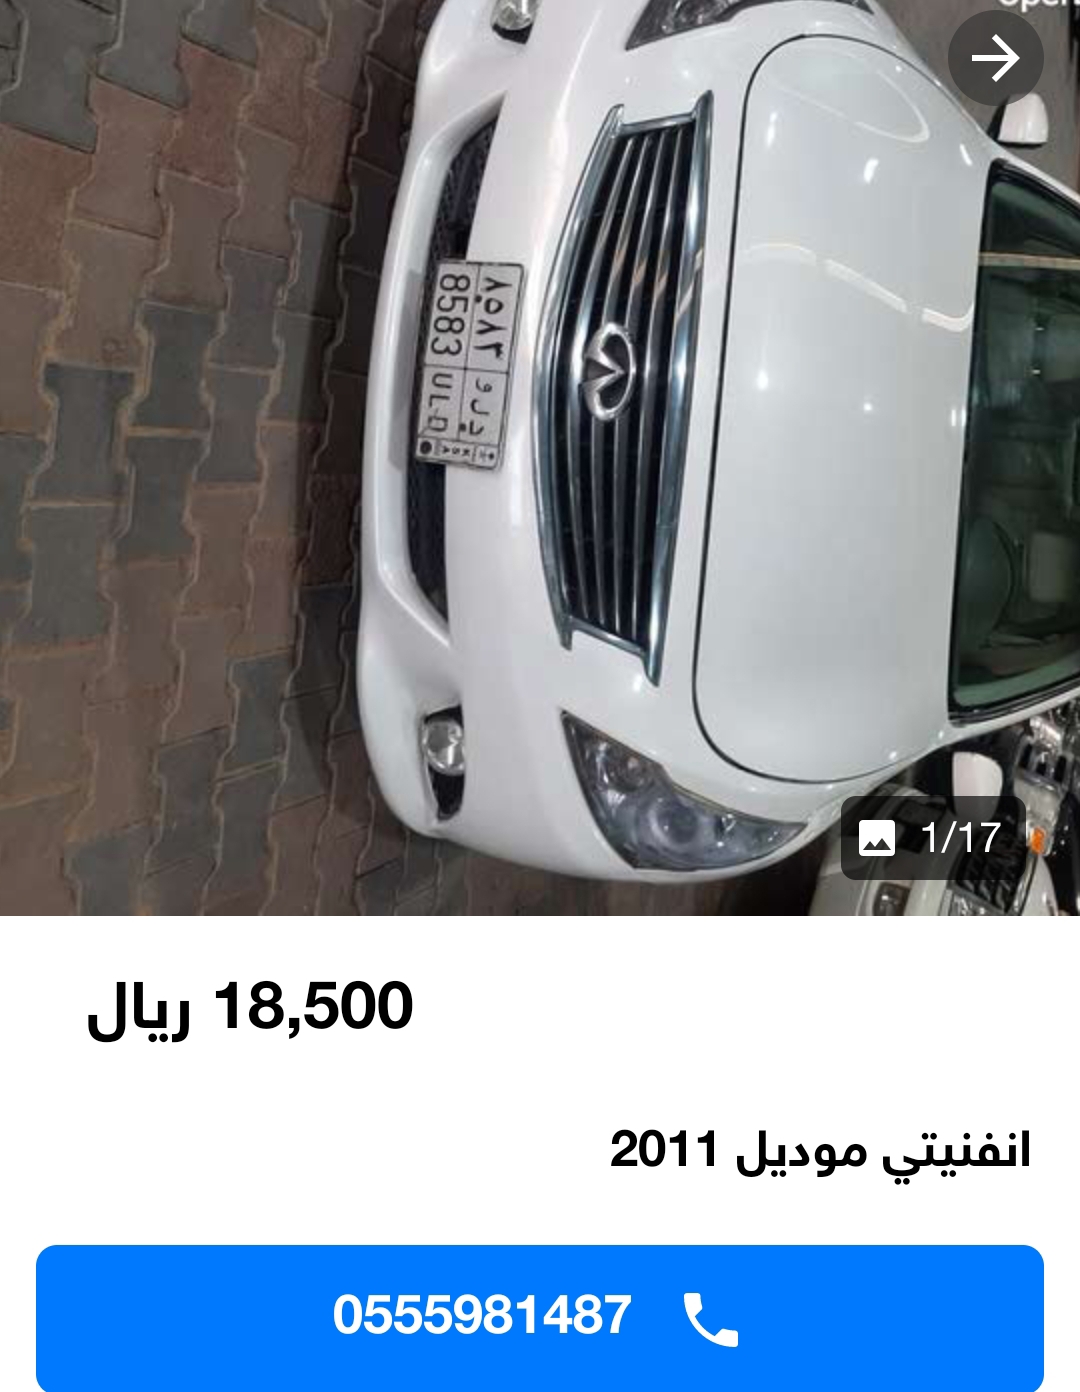 Screenshot ٢٠٢٣٠٨٢٣ ٠٠١٥٤٣ - مدونة التقنية العربية